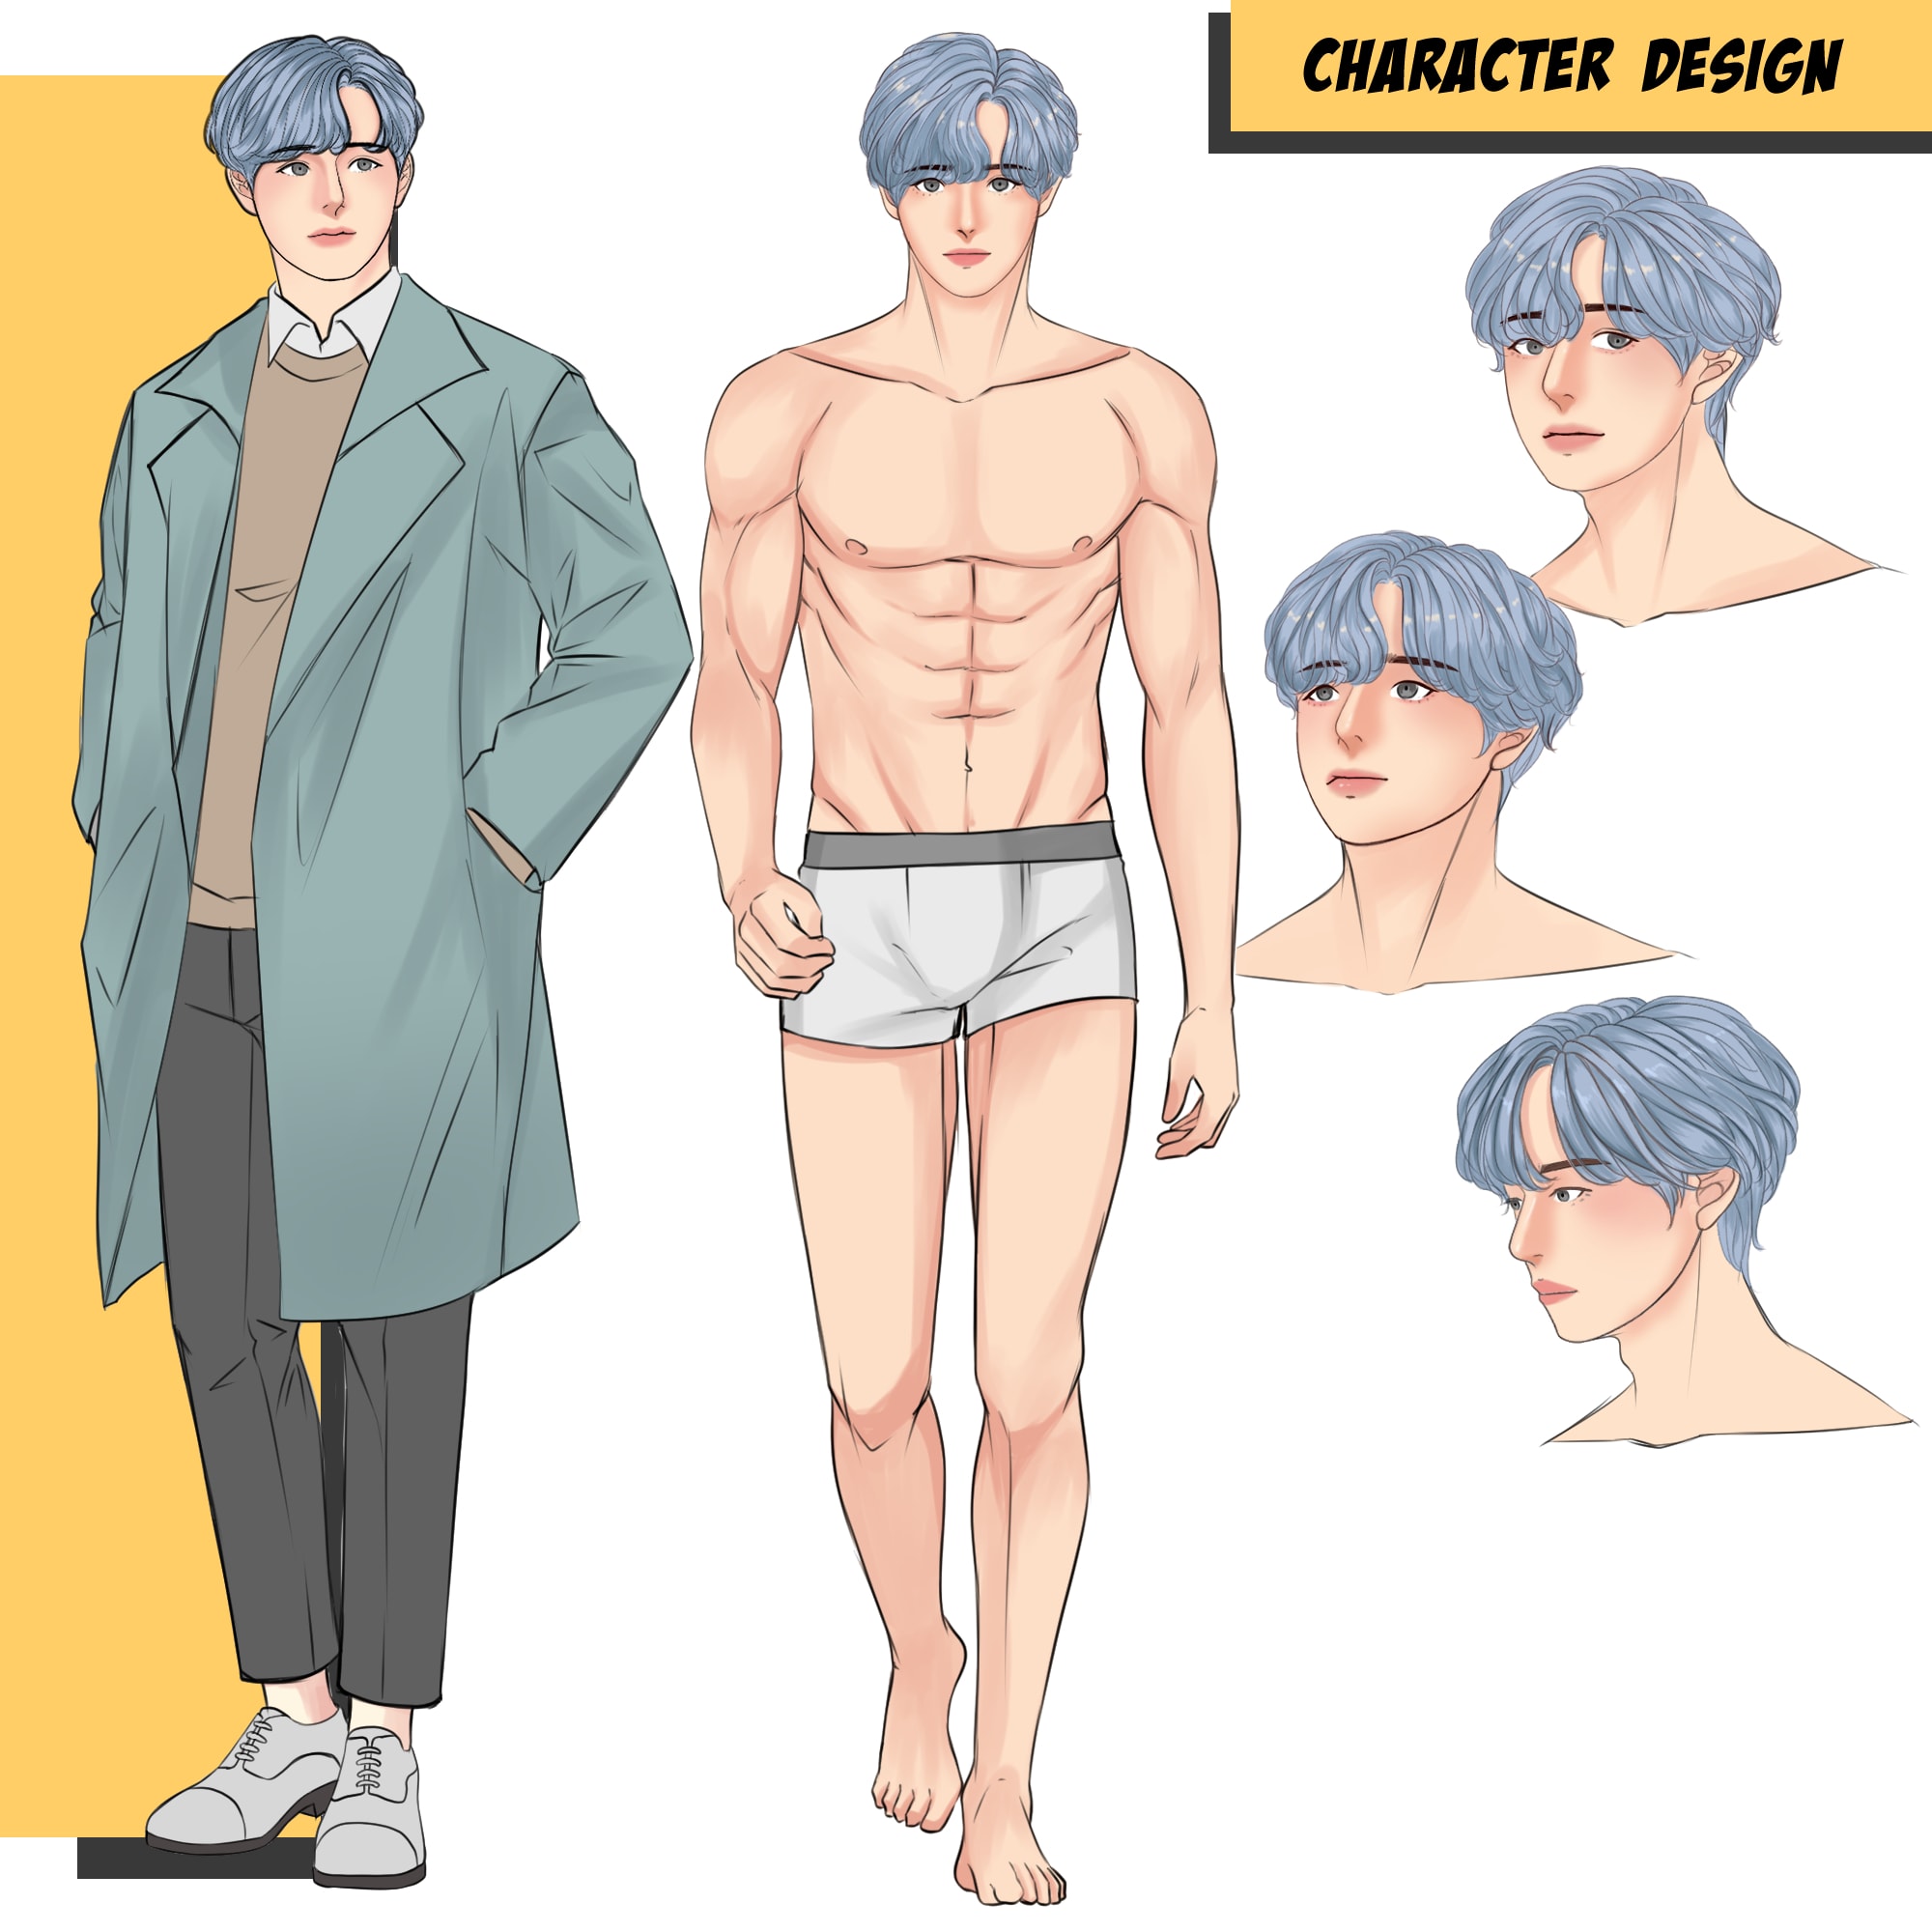 Draw Character Sheet Design In Manga Or Manhwa Or Anime Style By Herukurniawa5 Fiverr